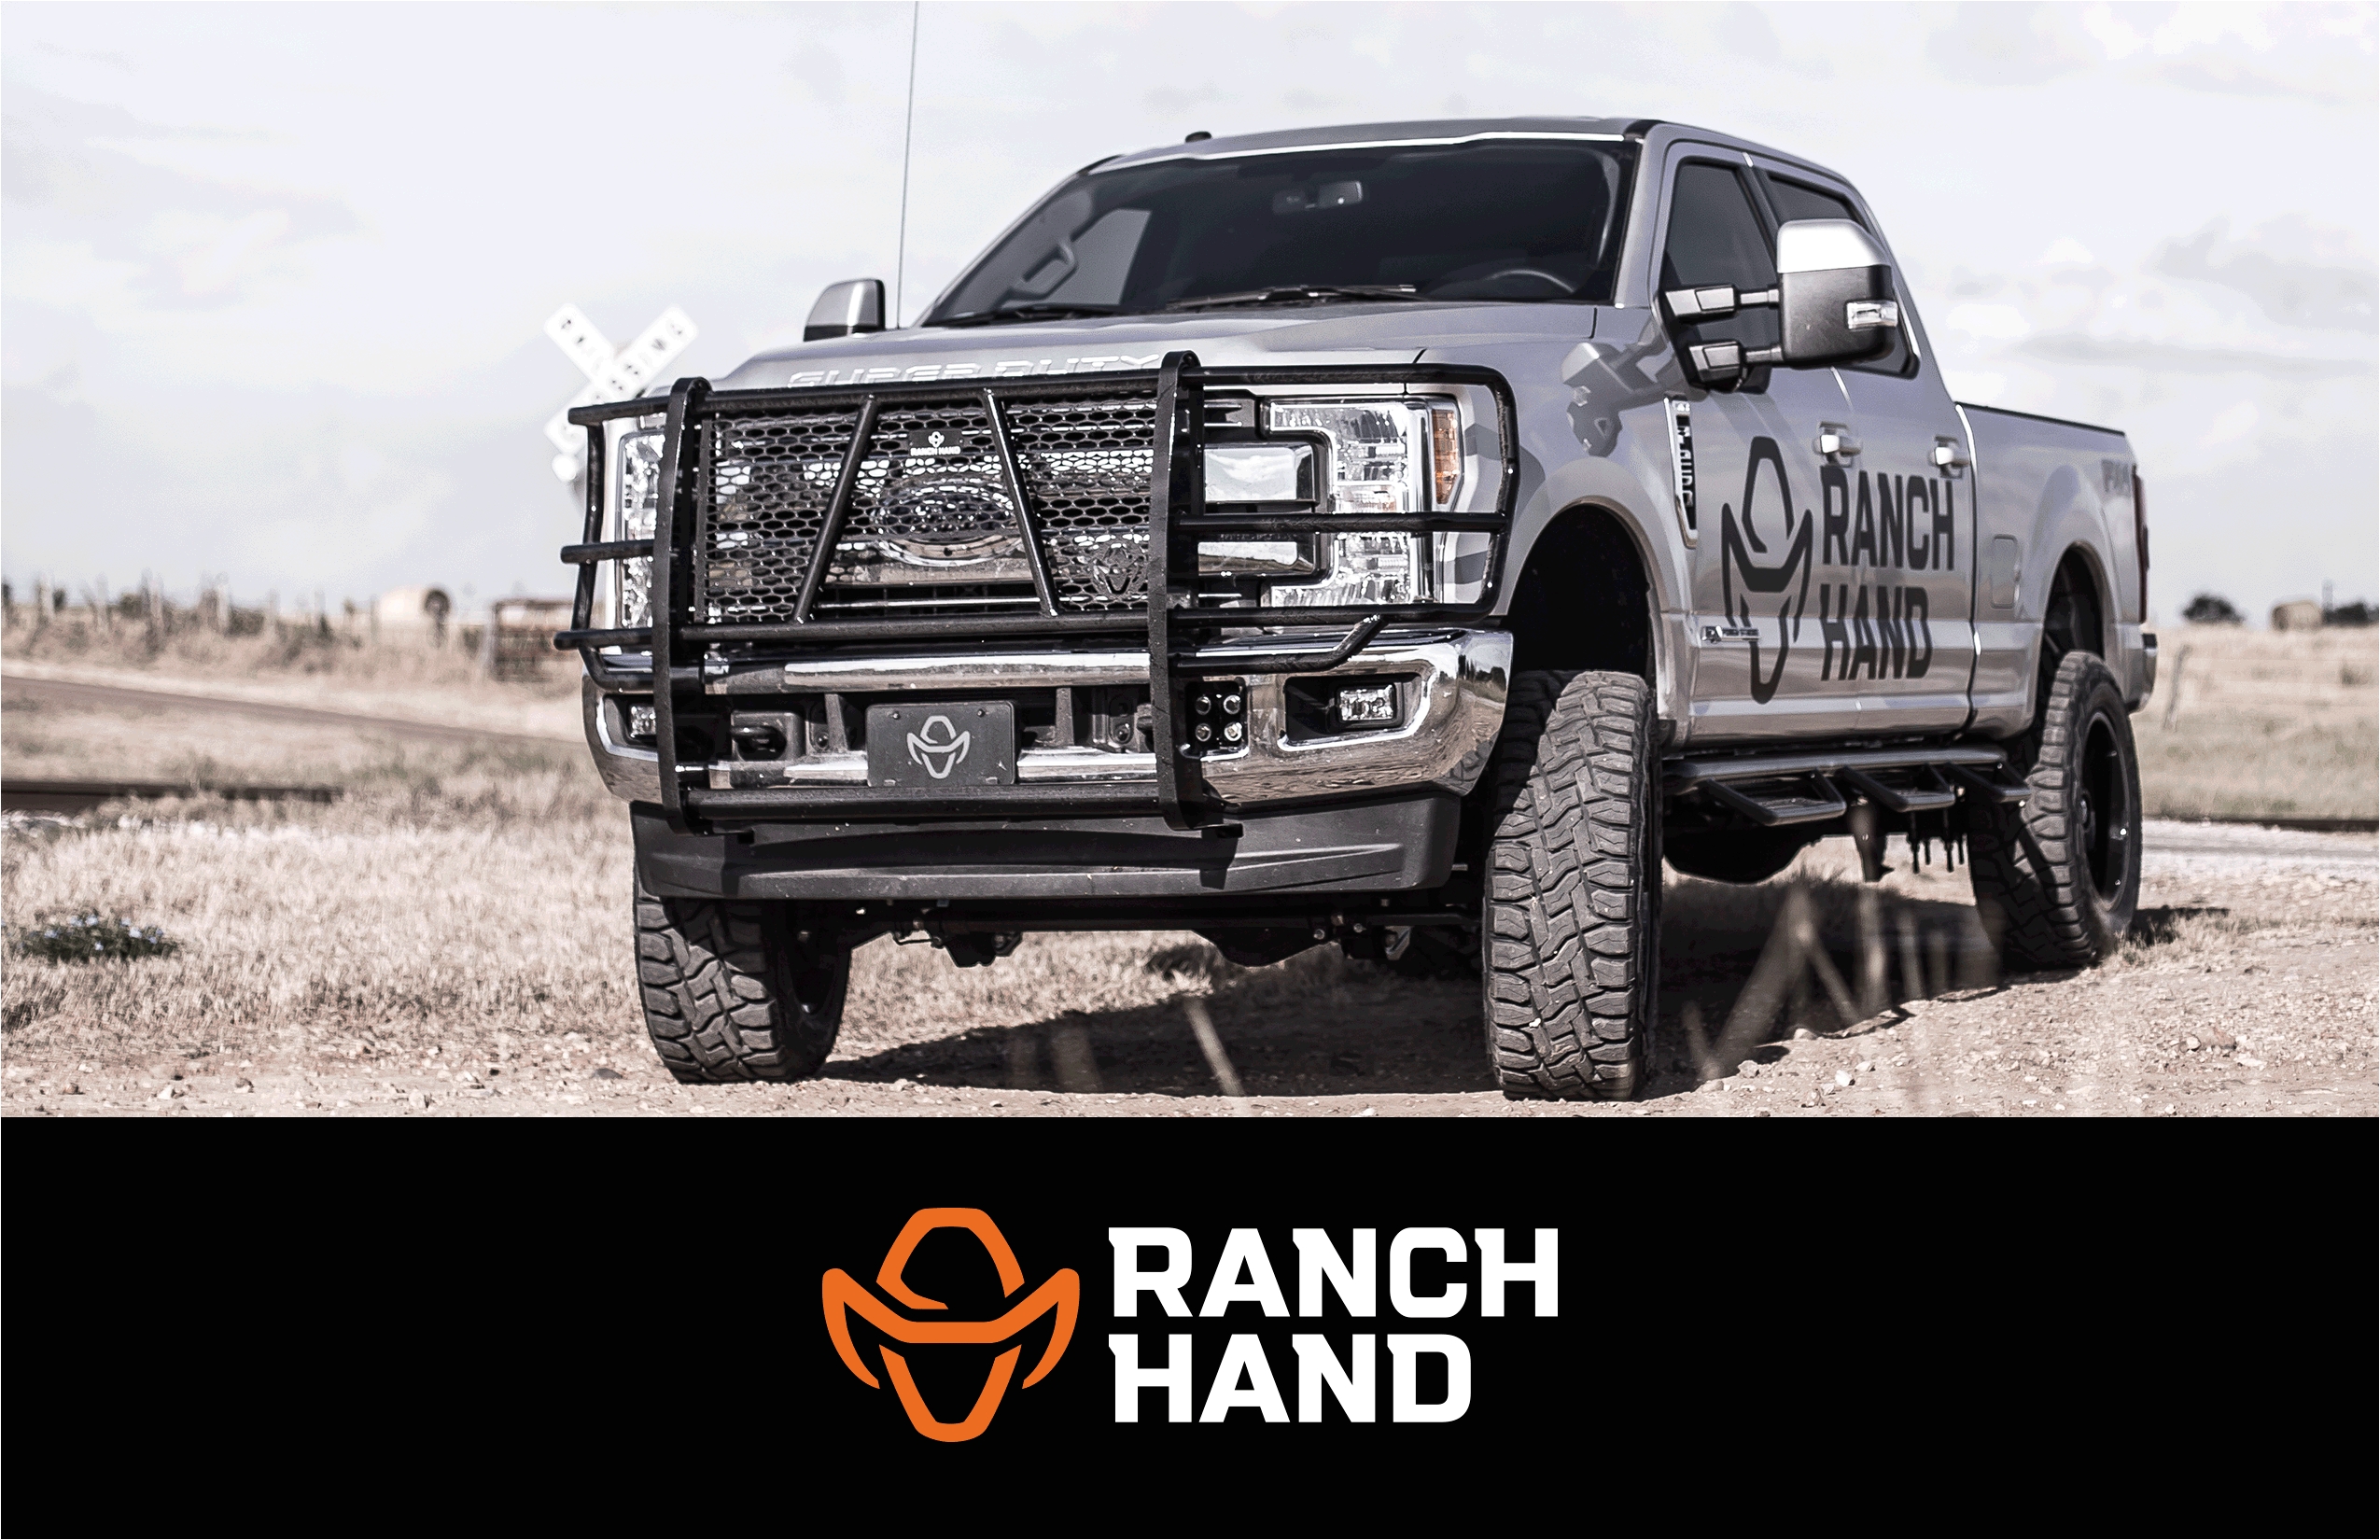 Ranch Hand Headache Rack Install Enter to Win Ranch Hand Blog